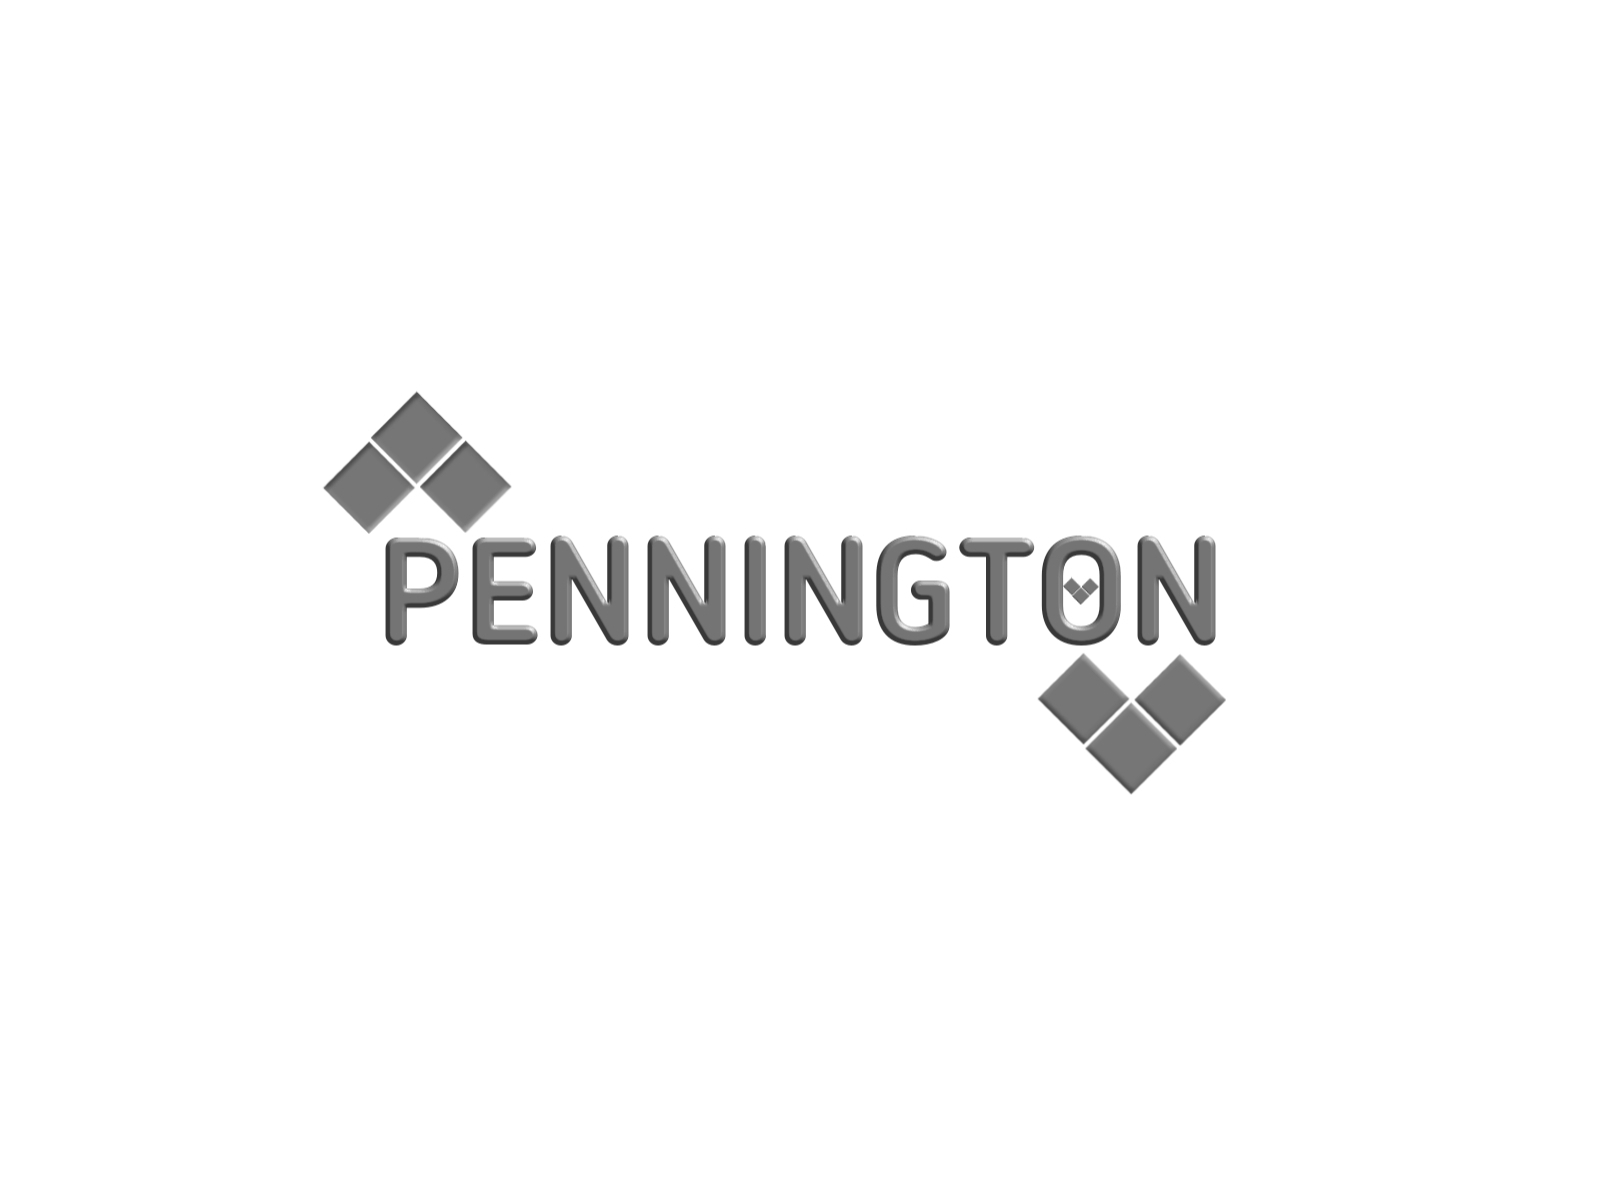 Pennington logo design by CreatorGT on Dribbble